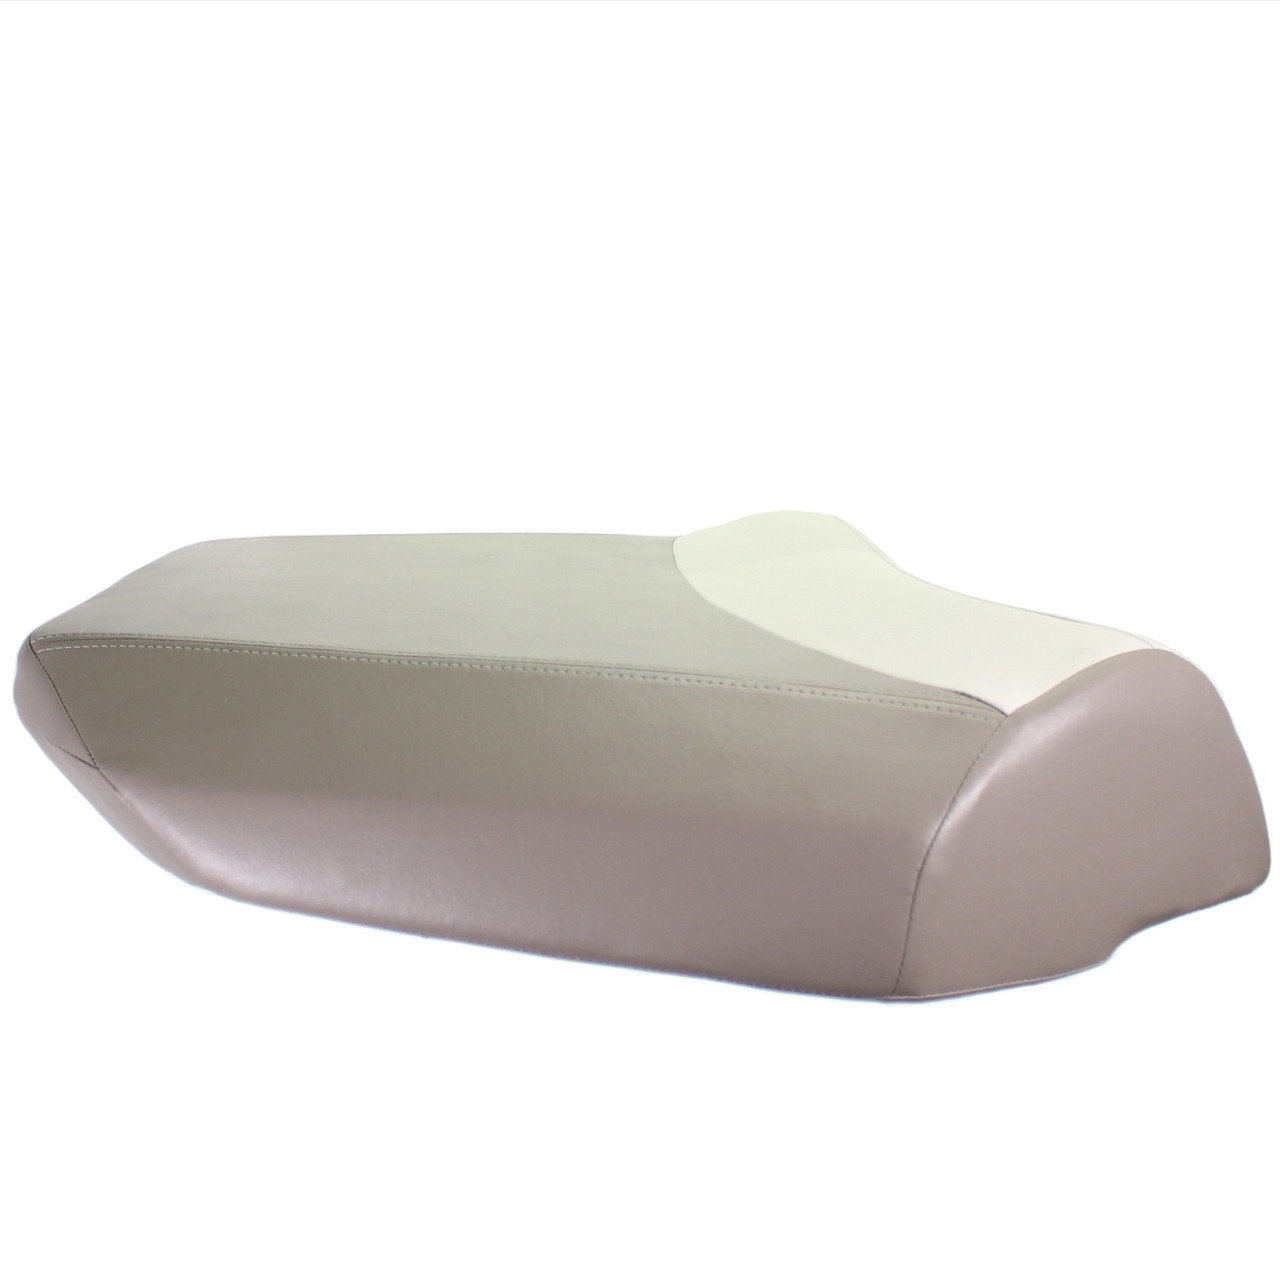 Sea-Doo New OEM Sundeck Grey/White Cushion, 269002567